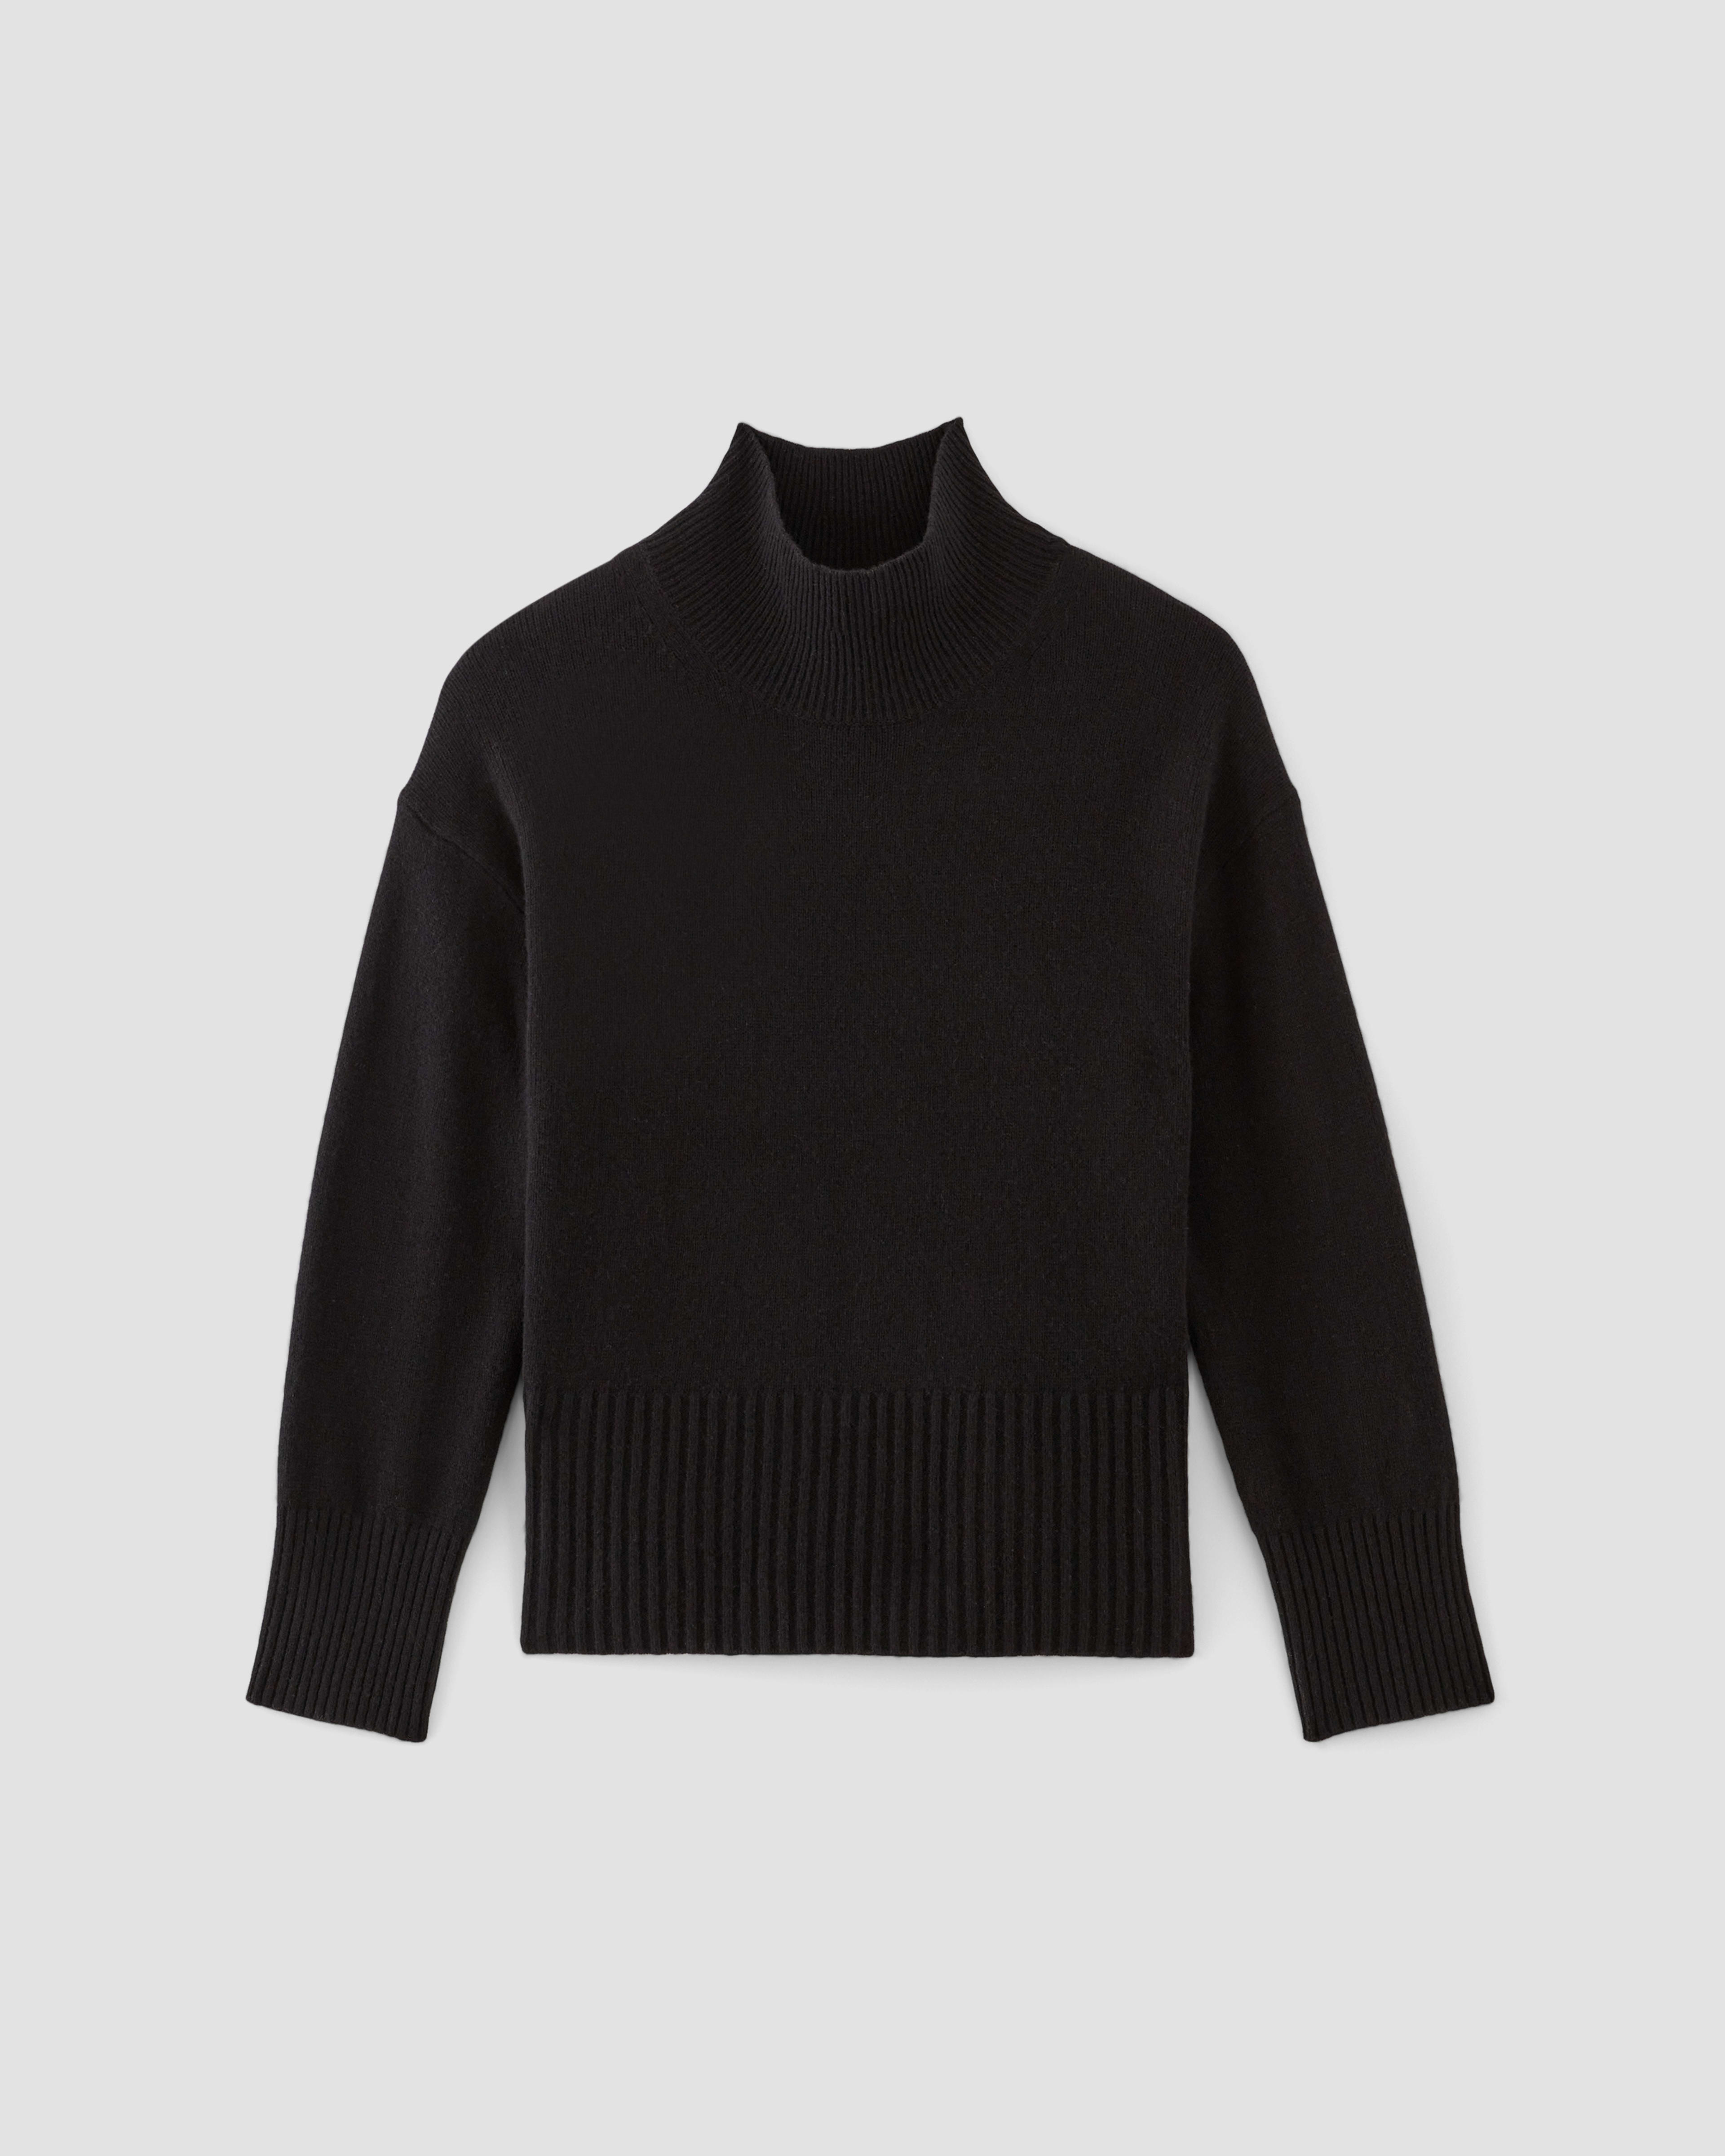 The Cashmere Oversized Turtleneck Black – Everlane